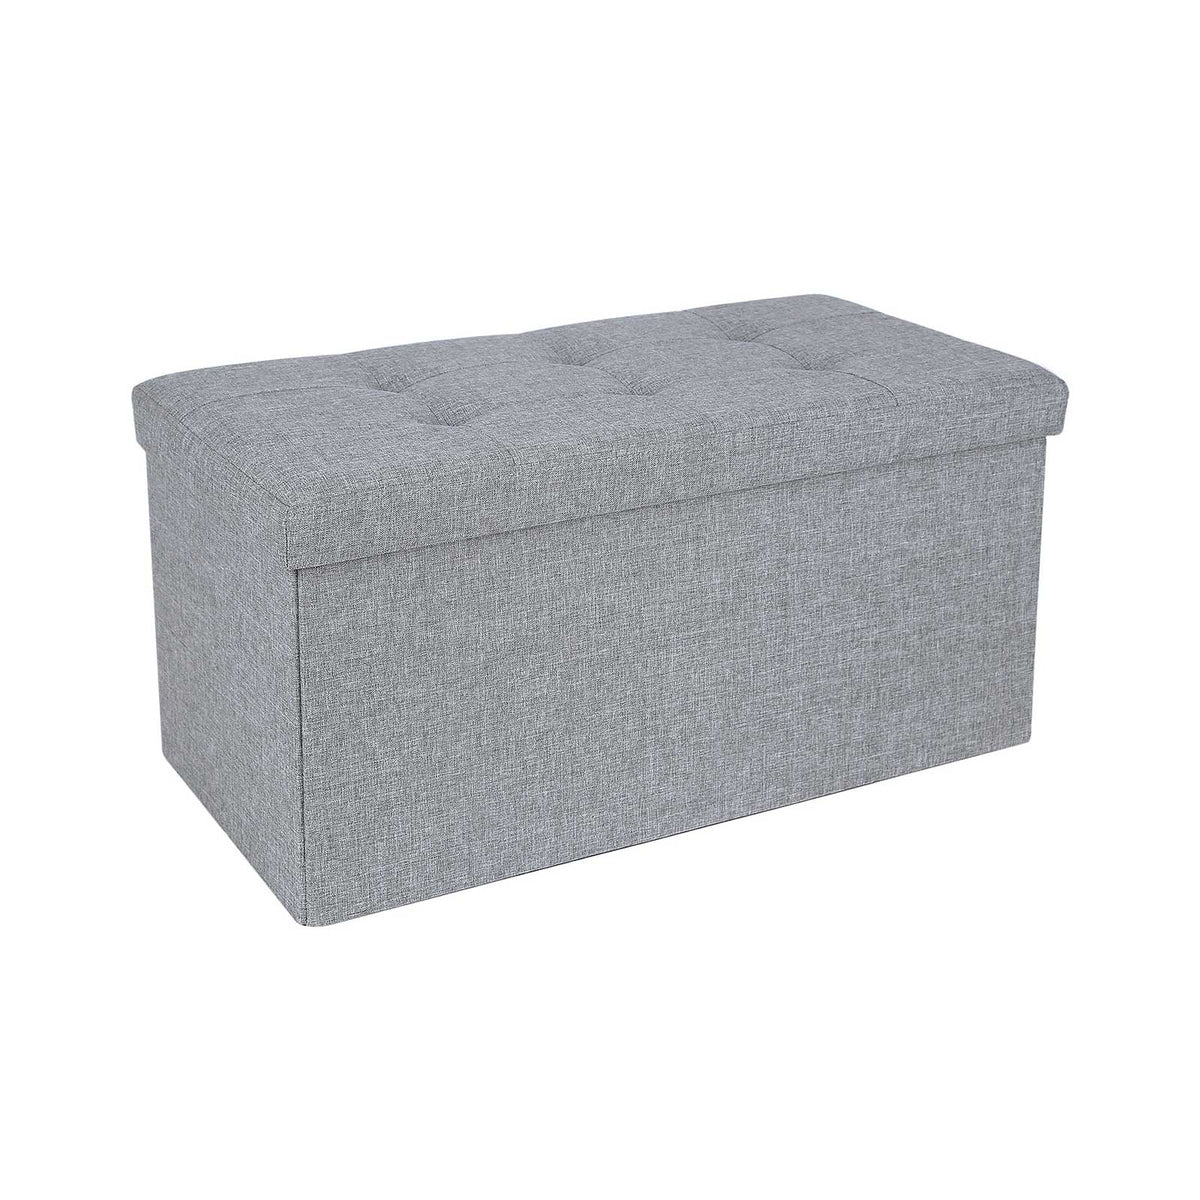 Baúl almacenamiento con patas, banco almacenaje, tela gris antracita 100 cm